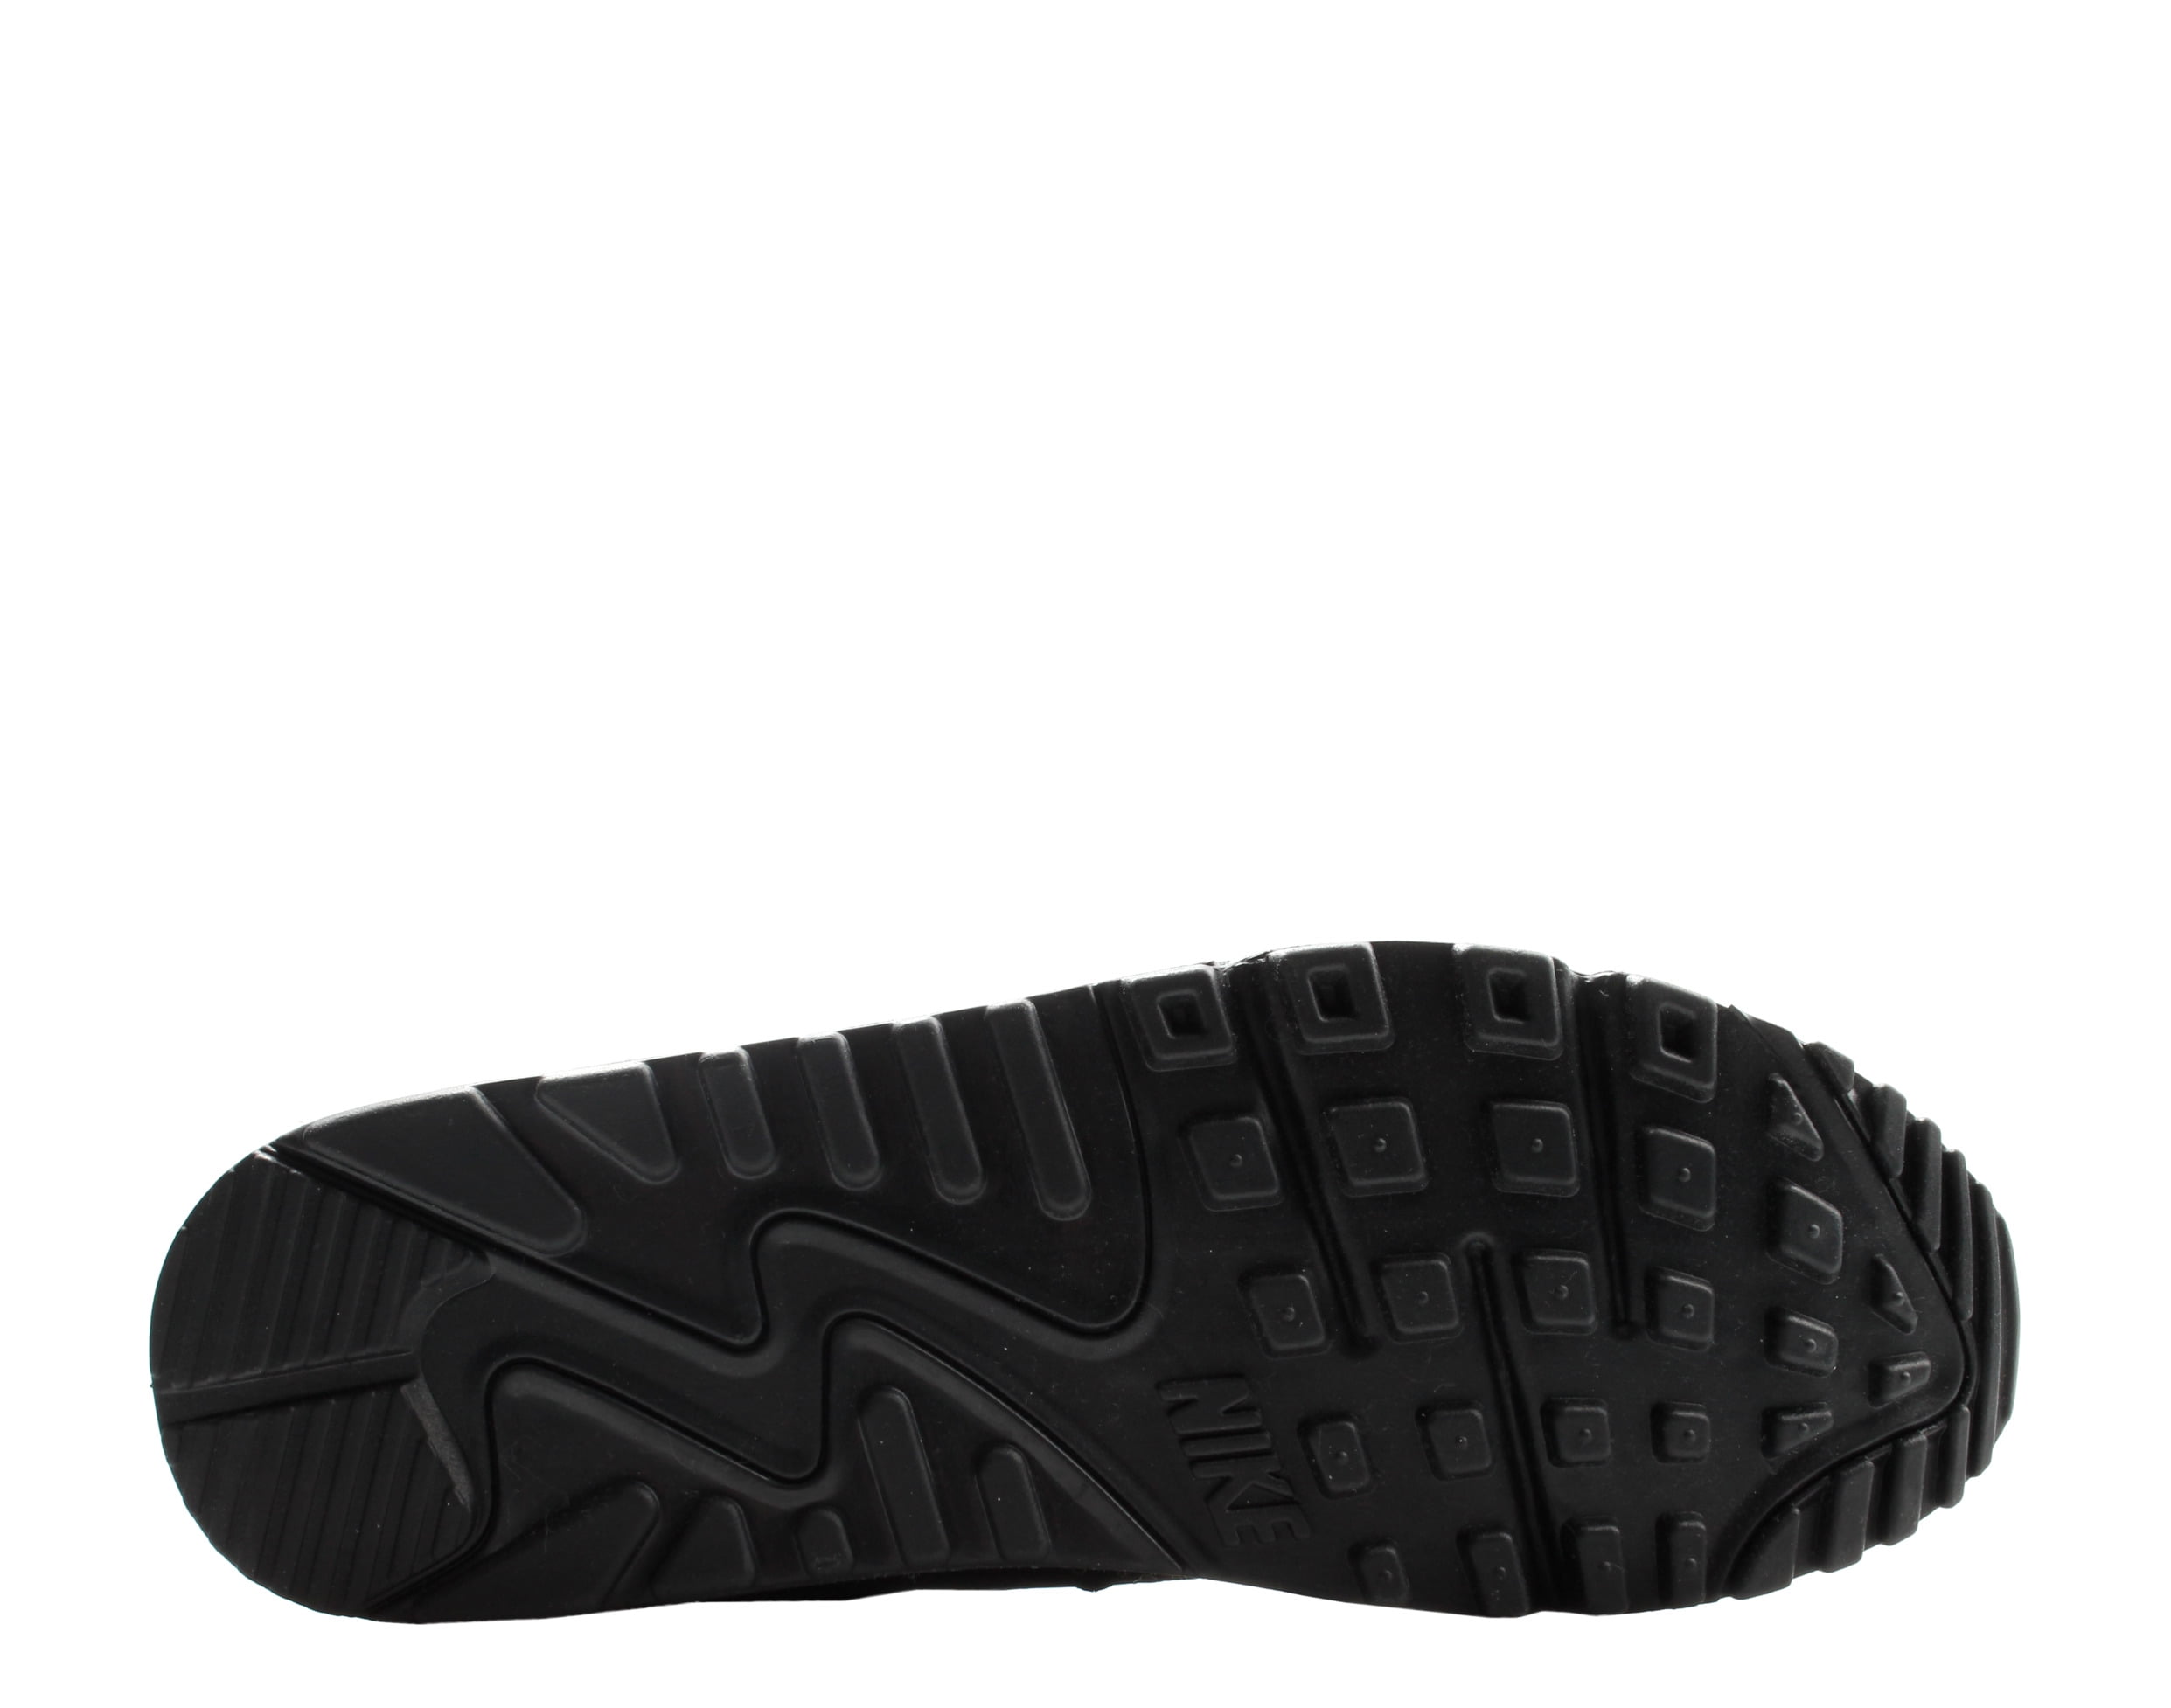 Nike Air Max "Triple Pack" Men's Shoes Black cn8490-003 - Walmart.com